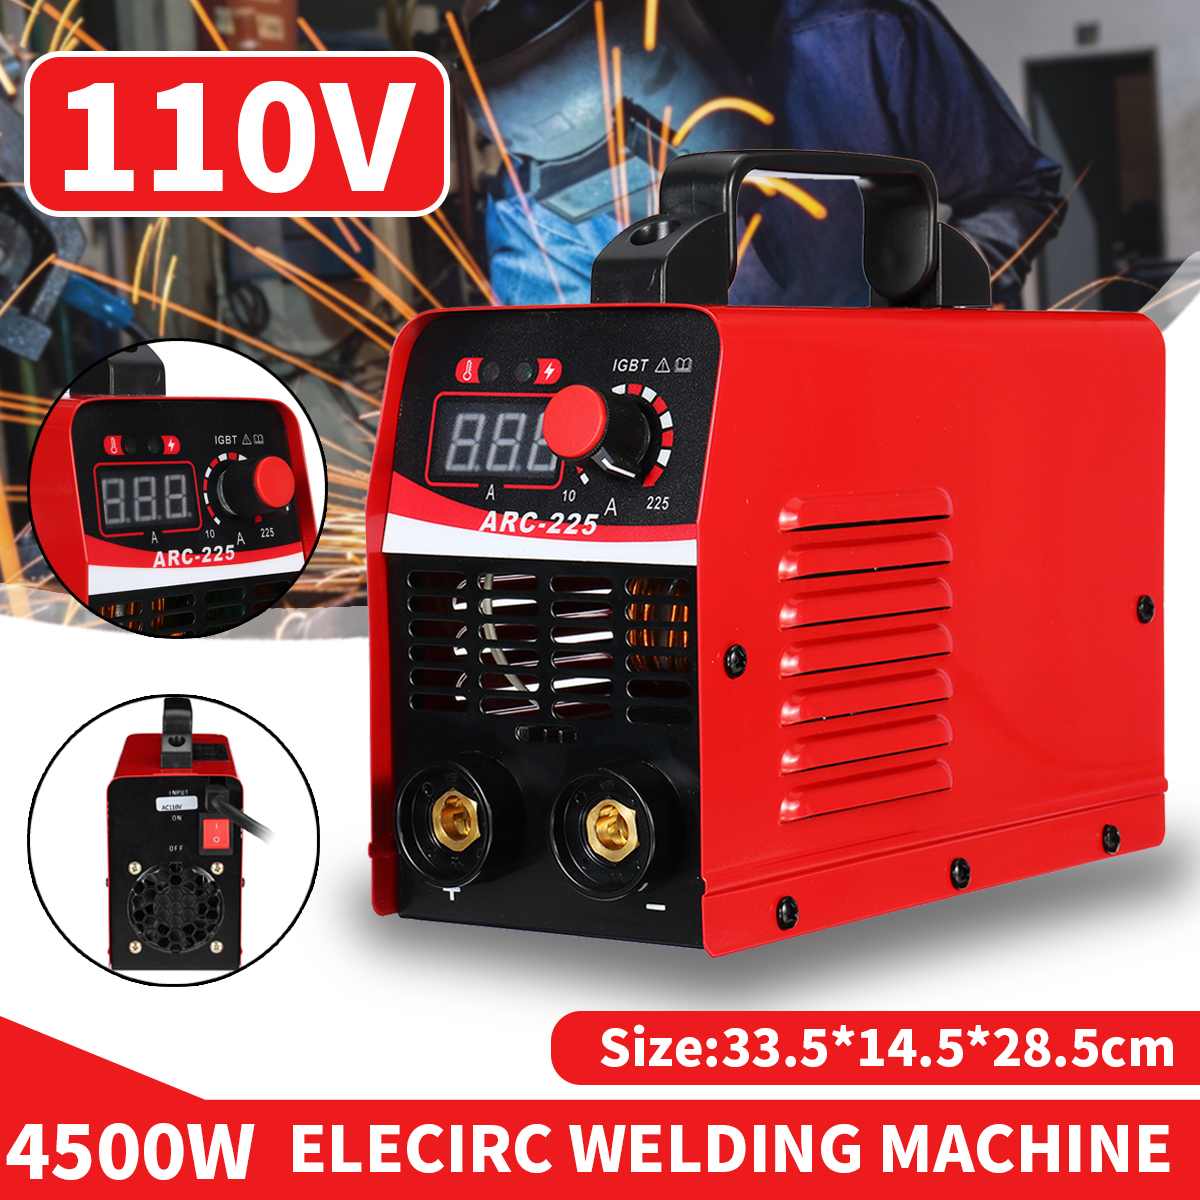 110v Inverter Arc Electric Welding Machine Diy Welder For Welding Electric Working Digital Display Multi Trigger Househo Shopee Singapore